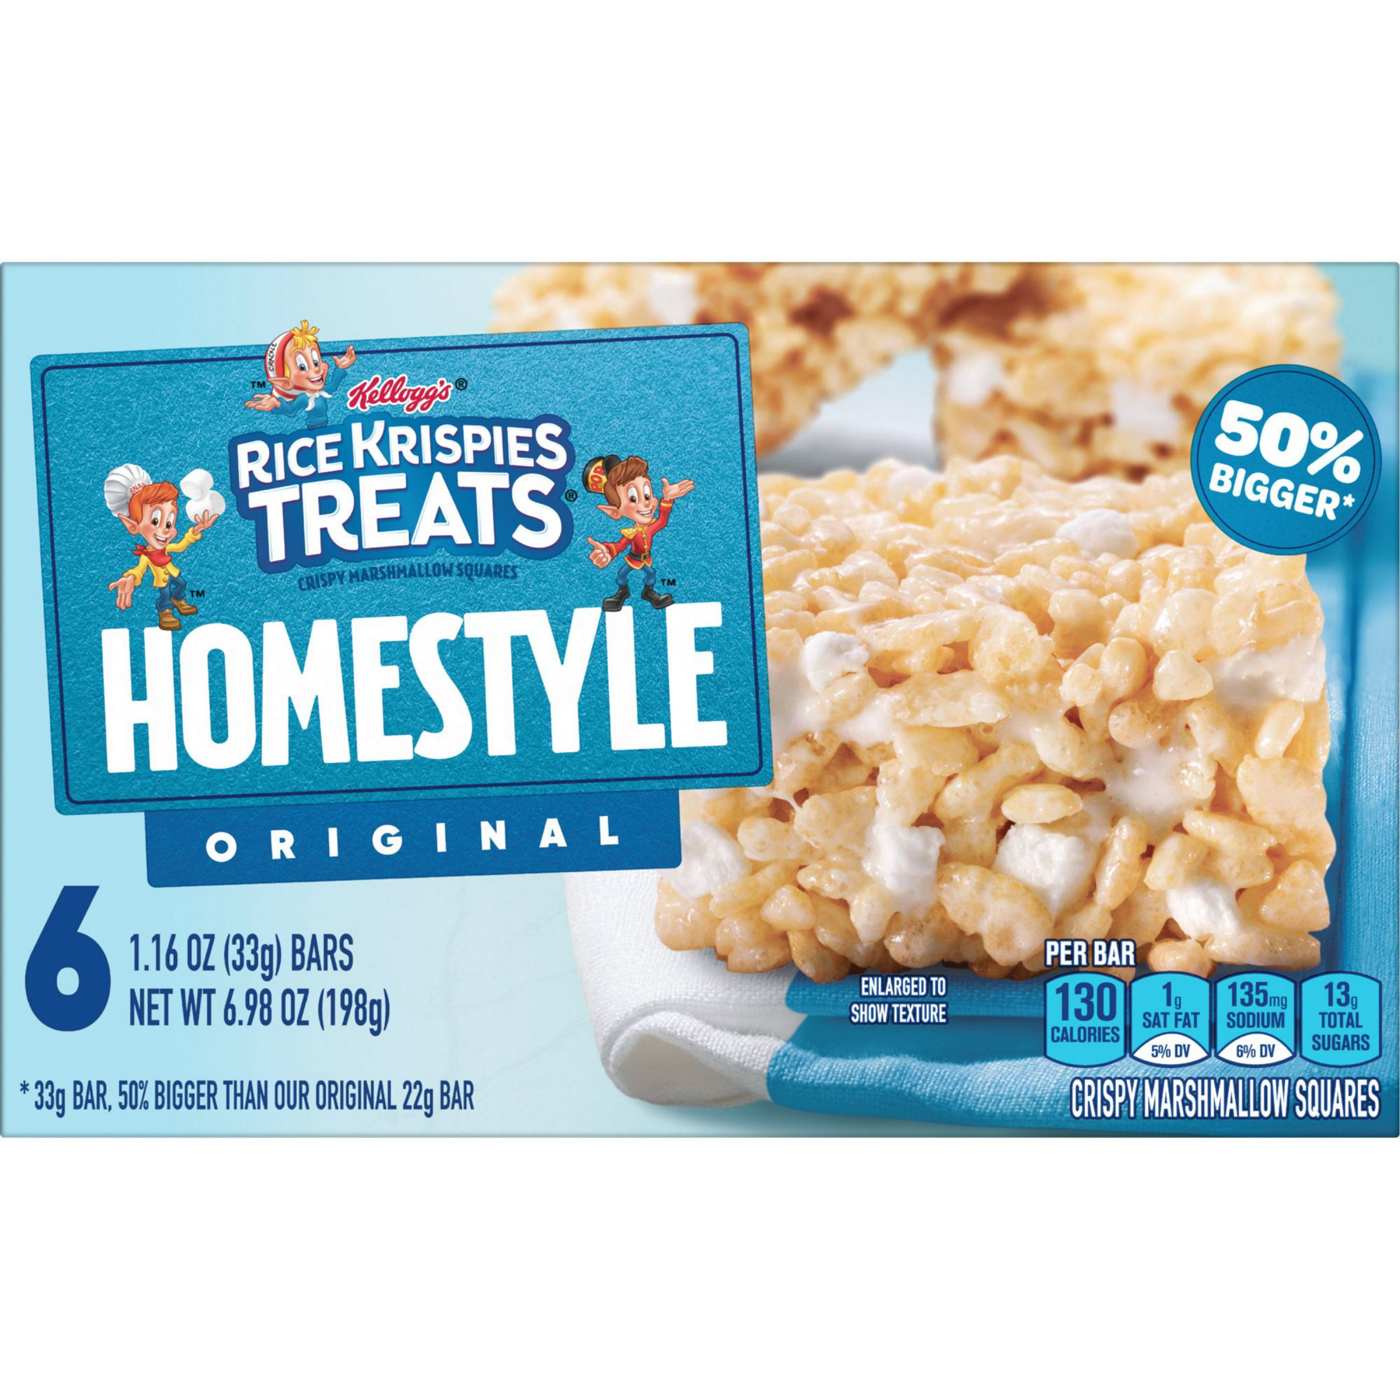 Rice Krispies Treats Homestyle Original Crispy Marshmallow Squares; image 4 of 5